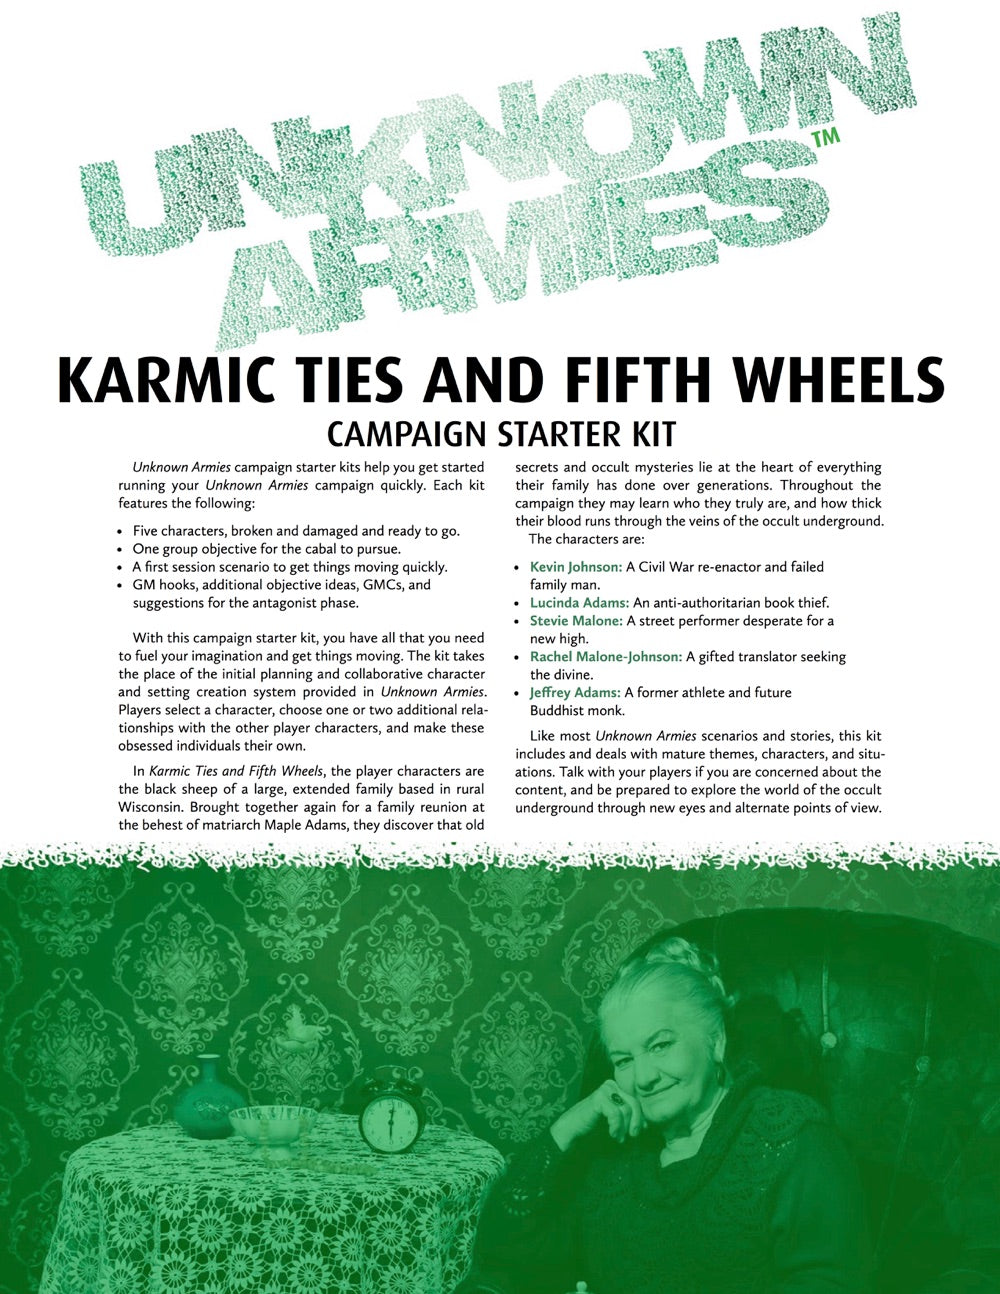 Karmic Ties and Fifth Wheels